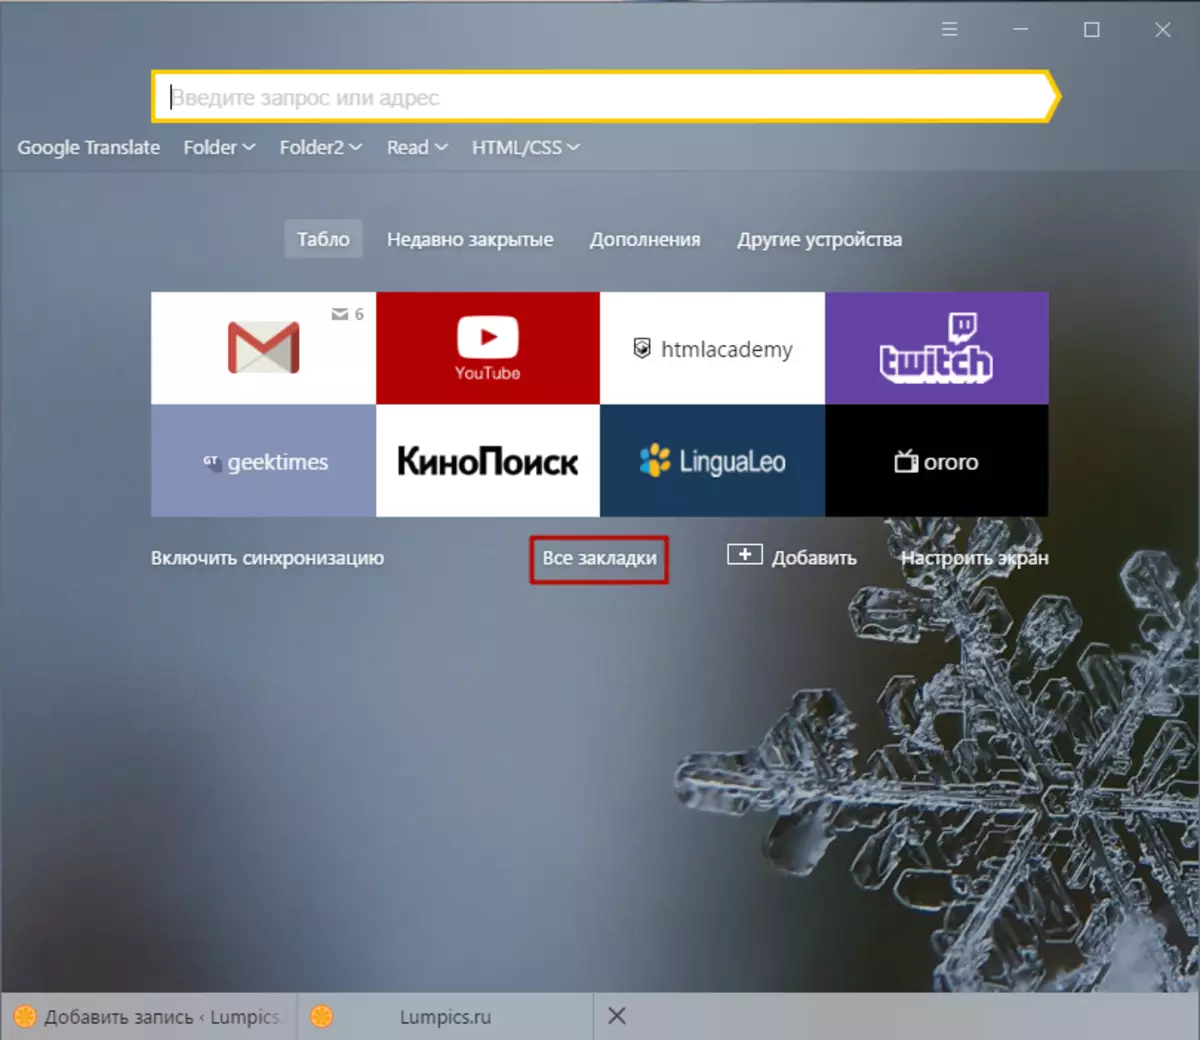 Yandex.browser-2 ರಲ್ಲಿ ಎಲ್ಲಾ ಬುಕ್ಮಾರ್ಕ್ಗಳು